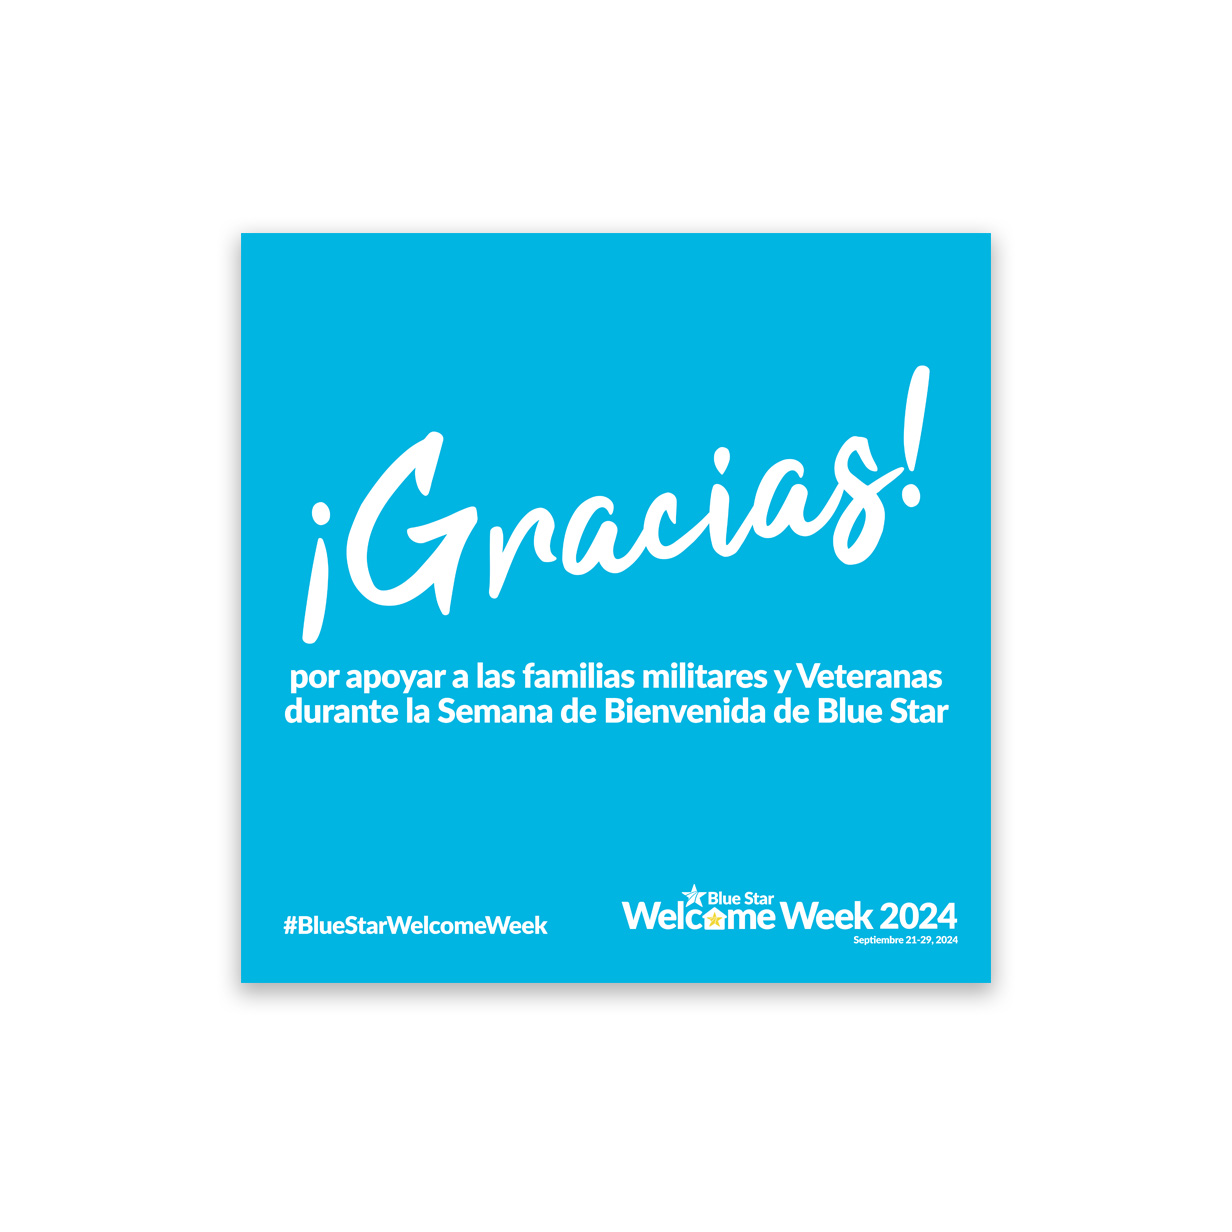 BSWW24_Thumb_gen-gracias-spanish